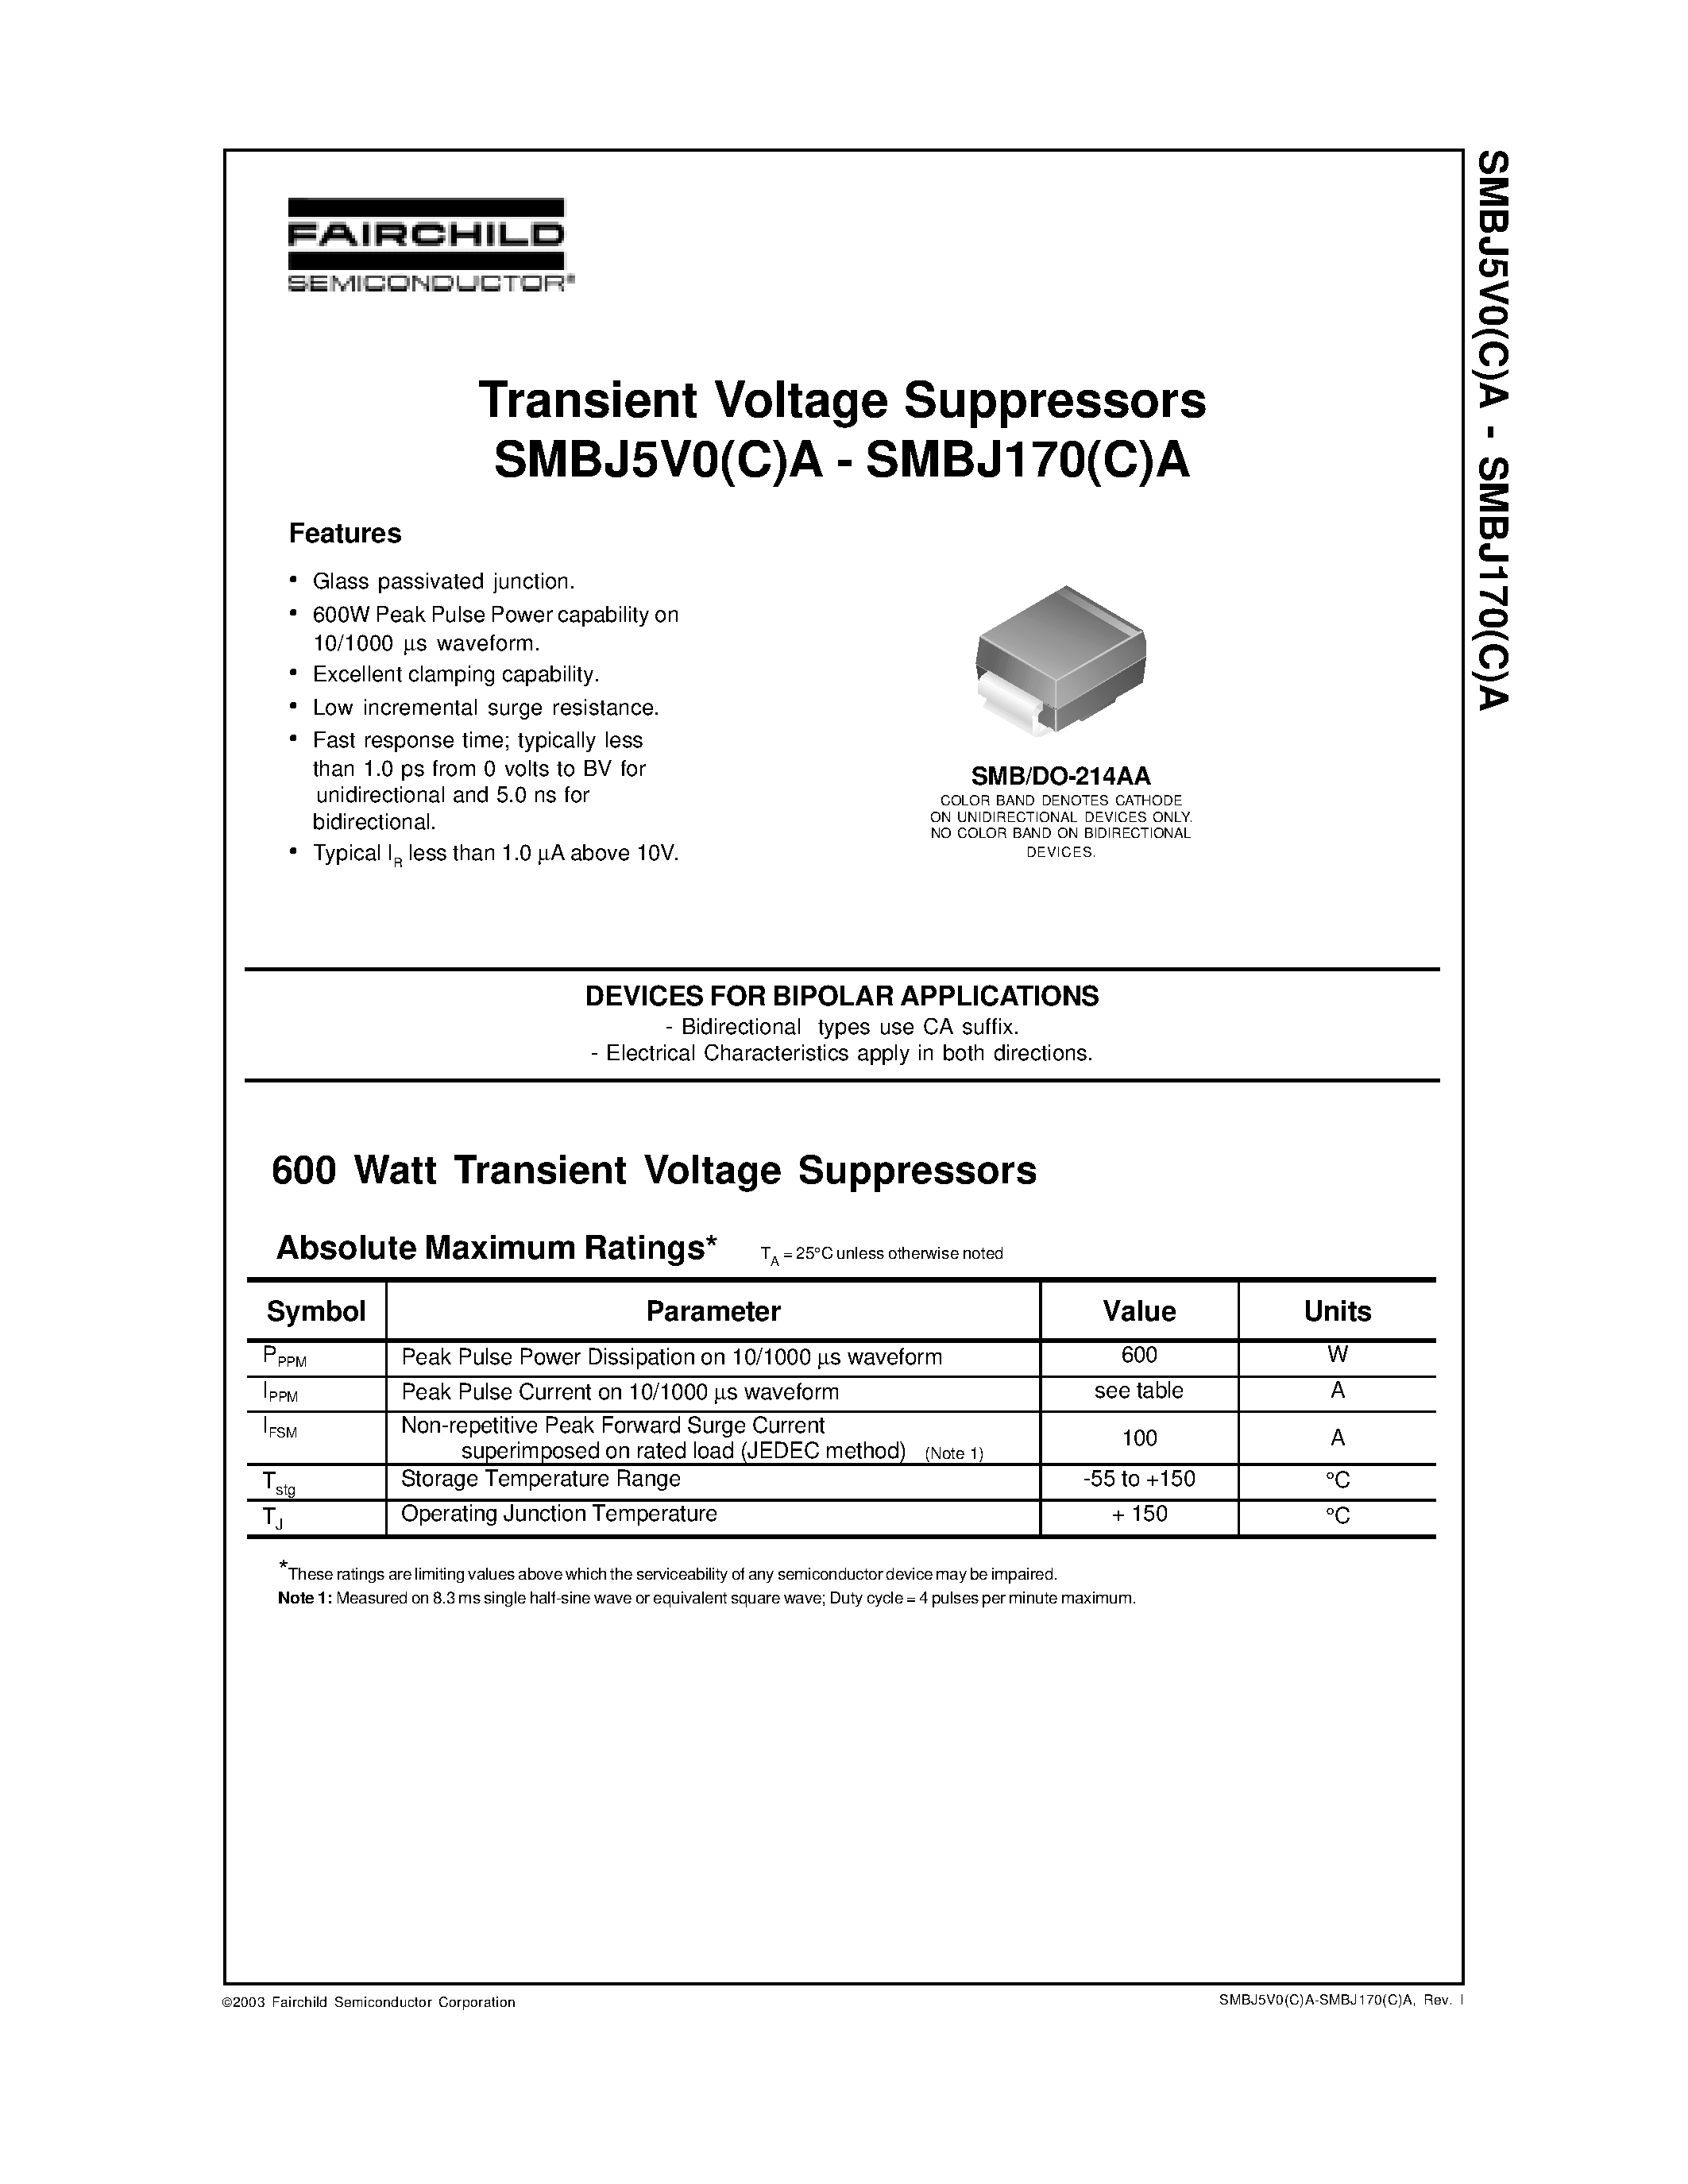 Datasheet SMBJ28A - Transient Voltage Suppressors SMBJ5V0(C)A - SMBJ170(C)A page 1